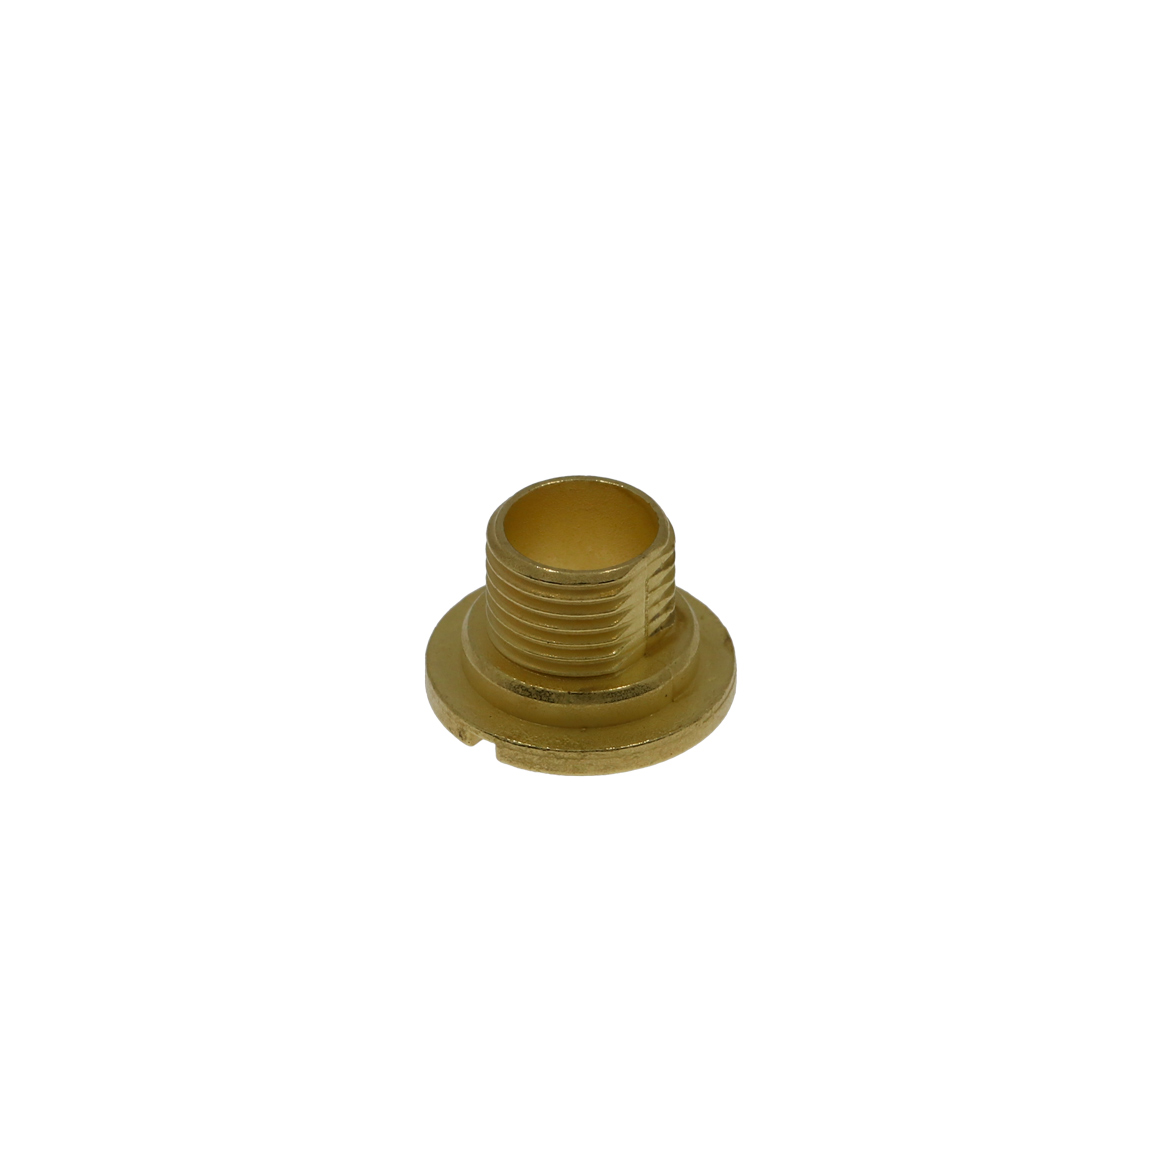 Fixation nut brass 9 mm